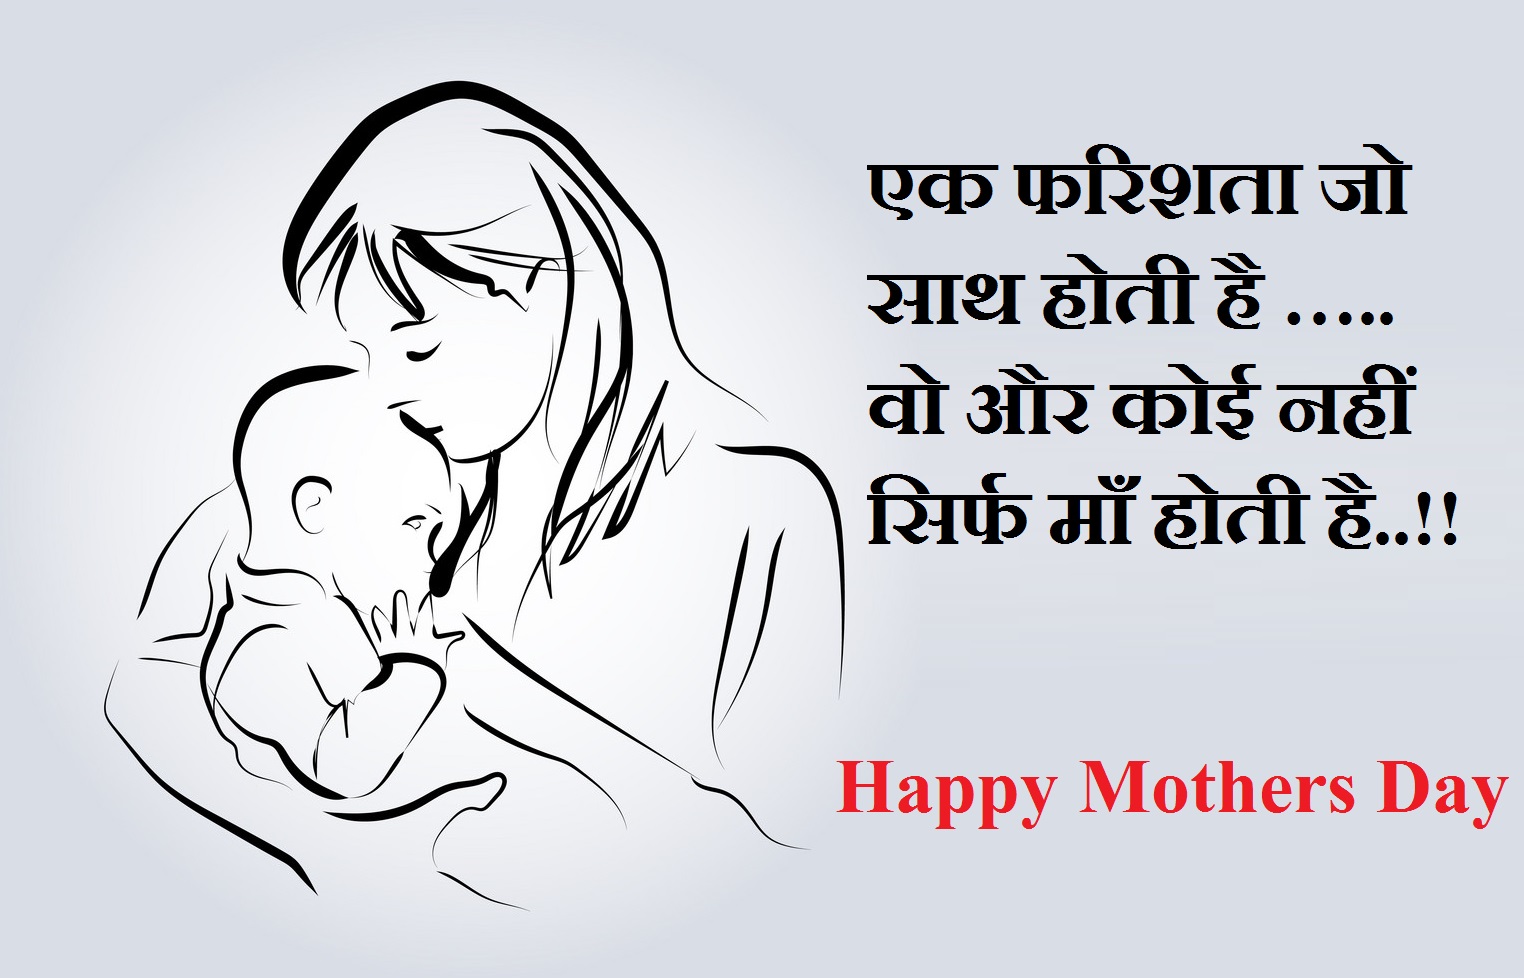 Mothers day Shayari image for whatsapp DP